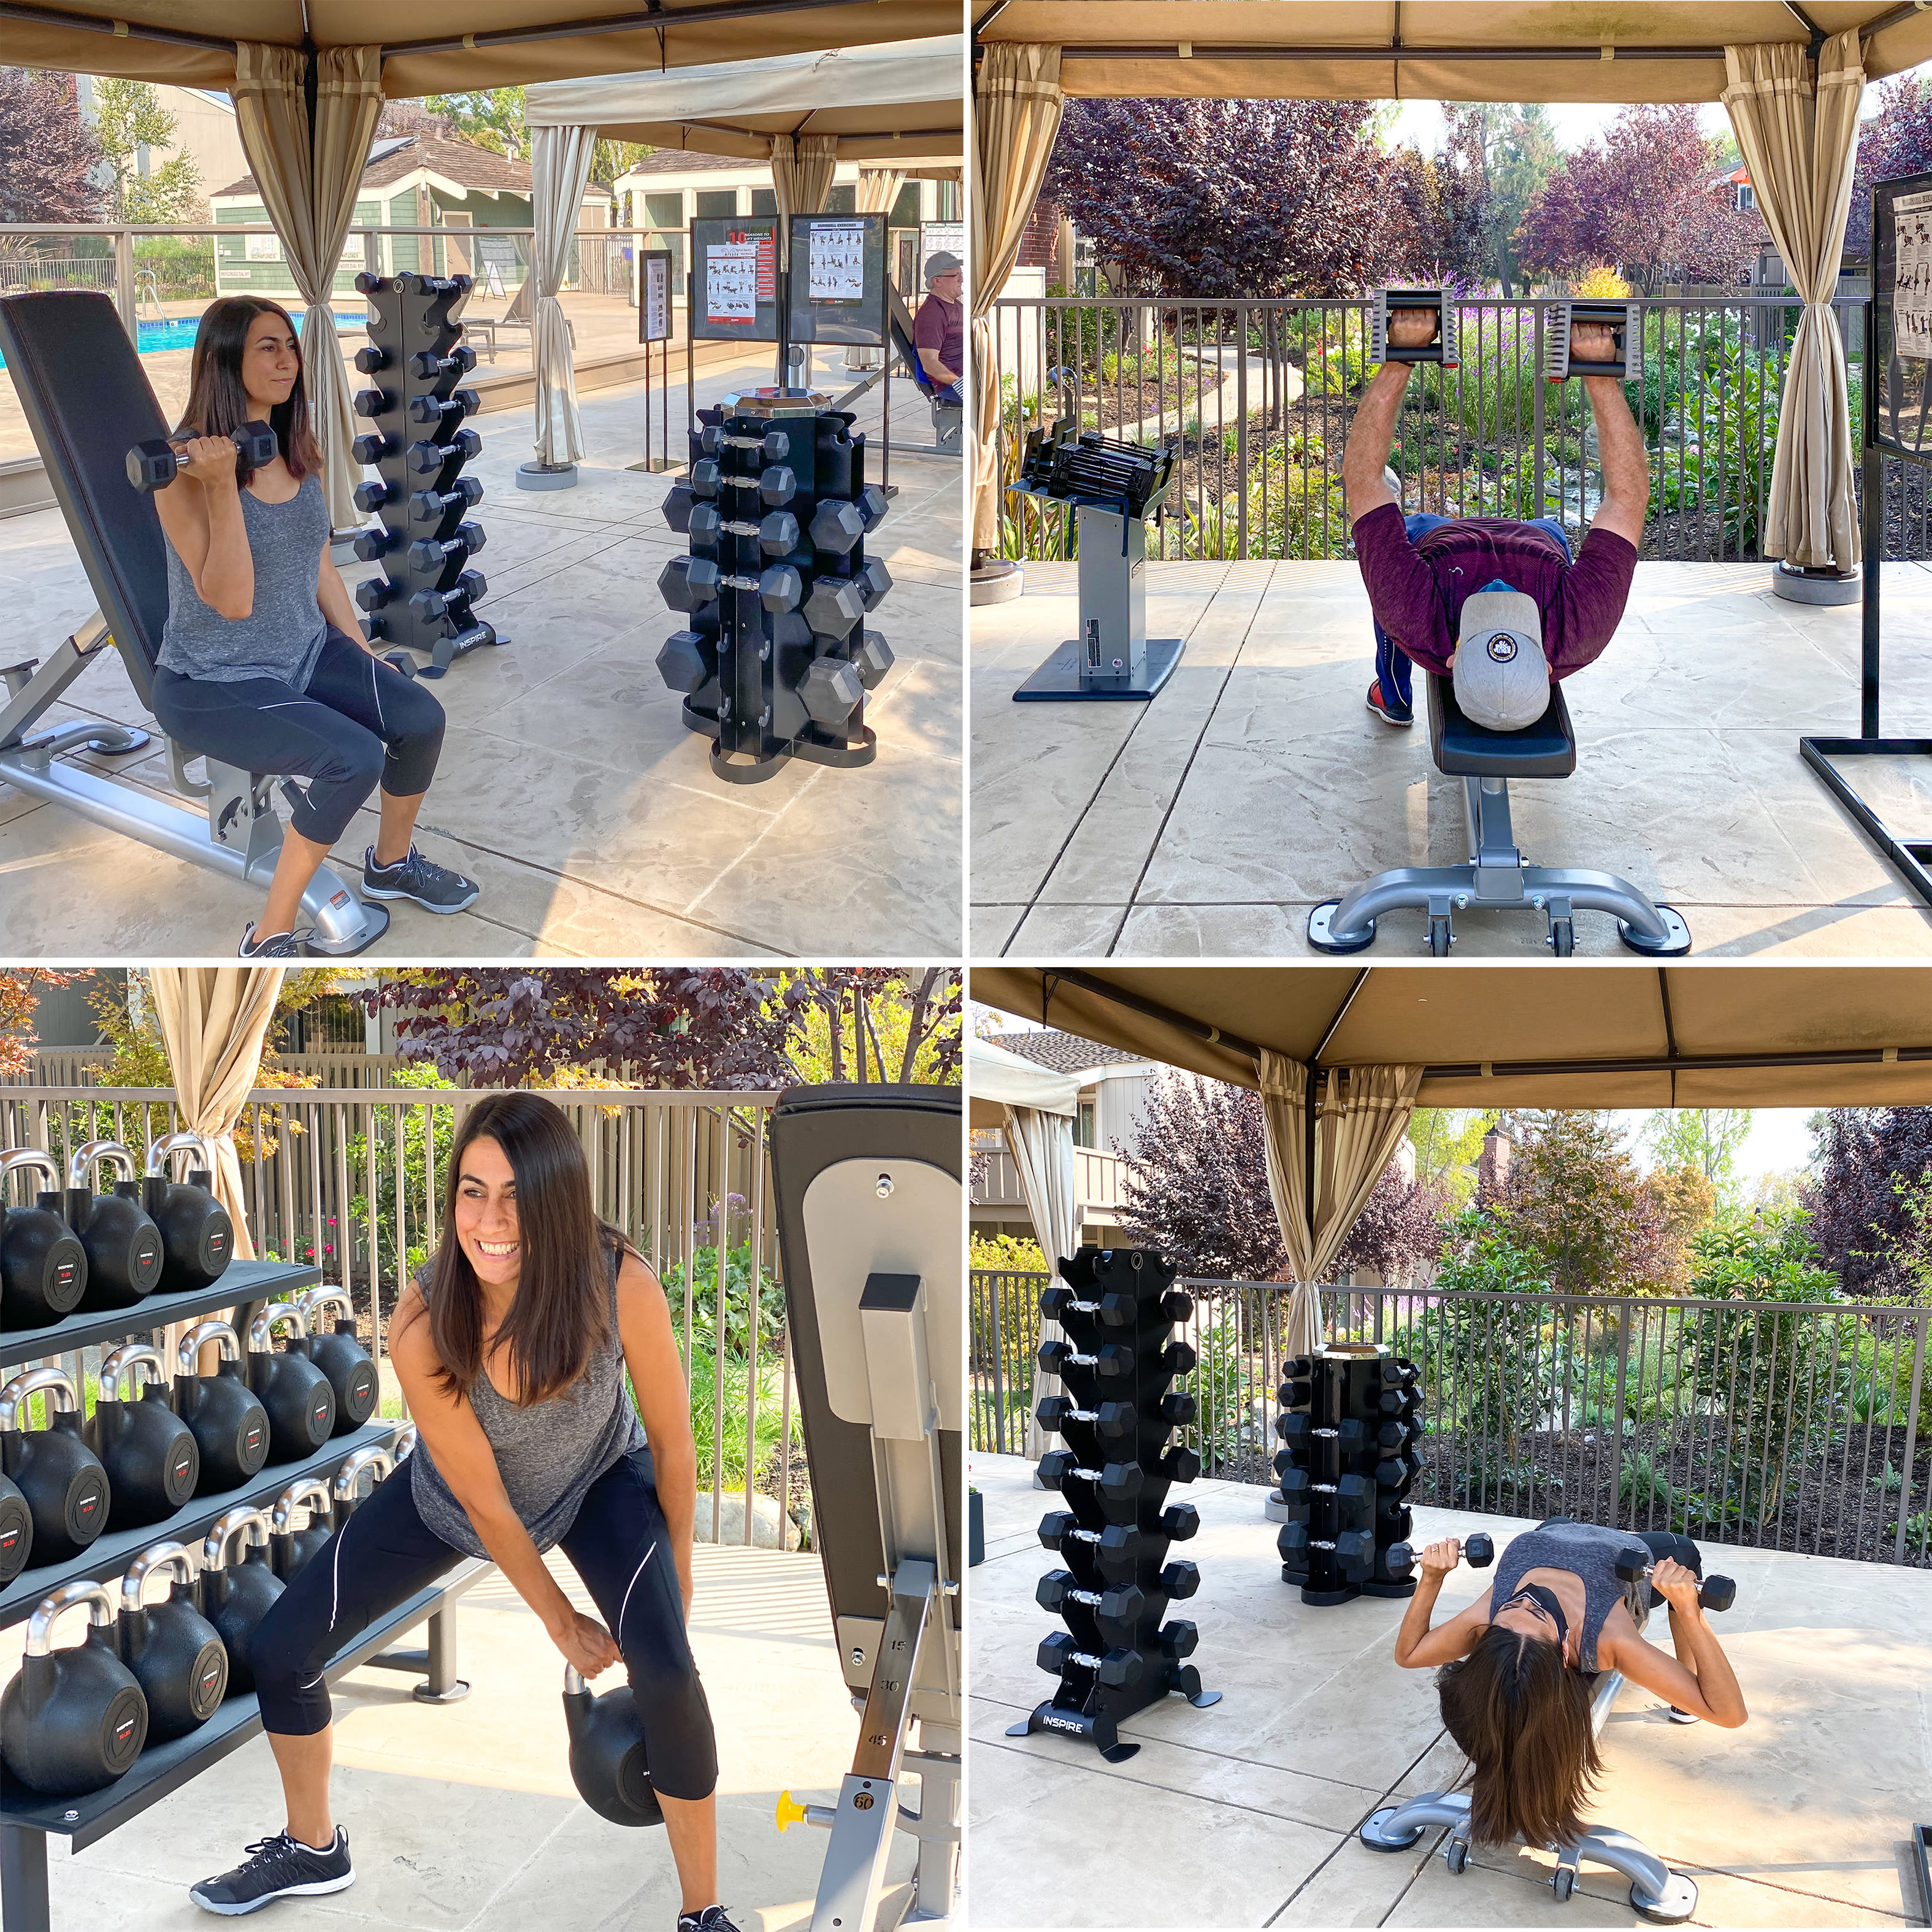 Outdoor fitness area at Halford Gardens Apartments in Santa Clara, California